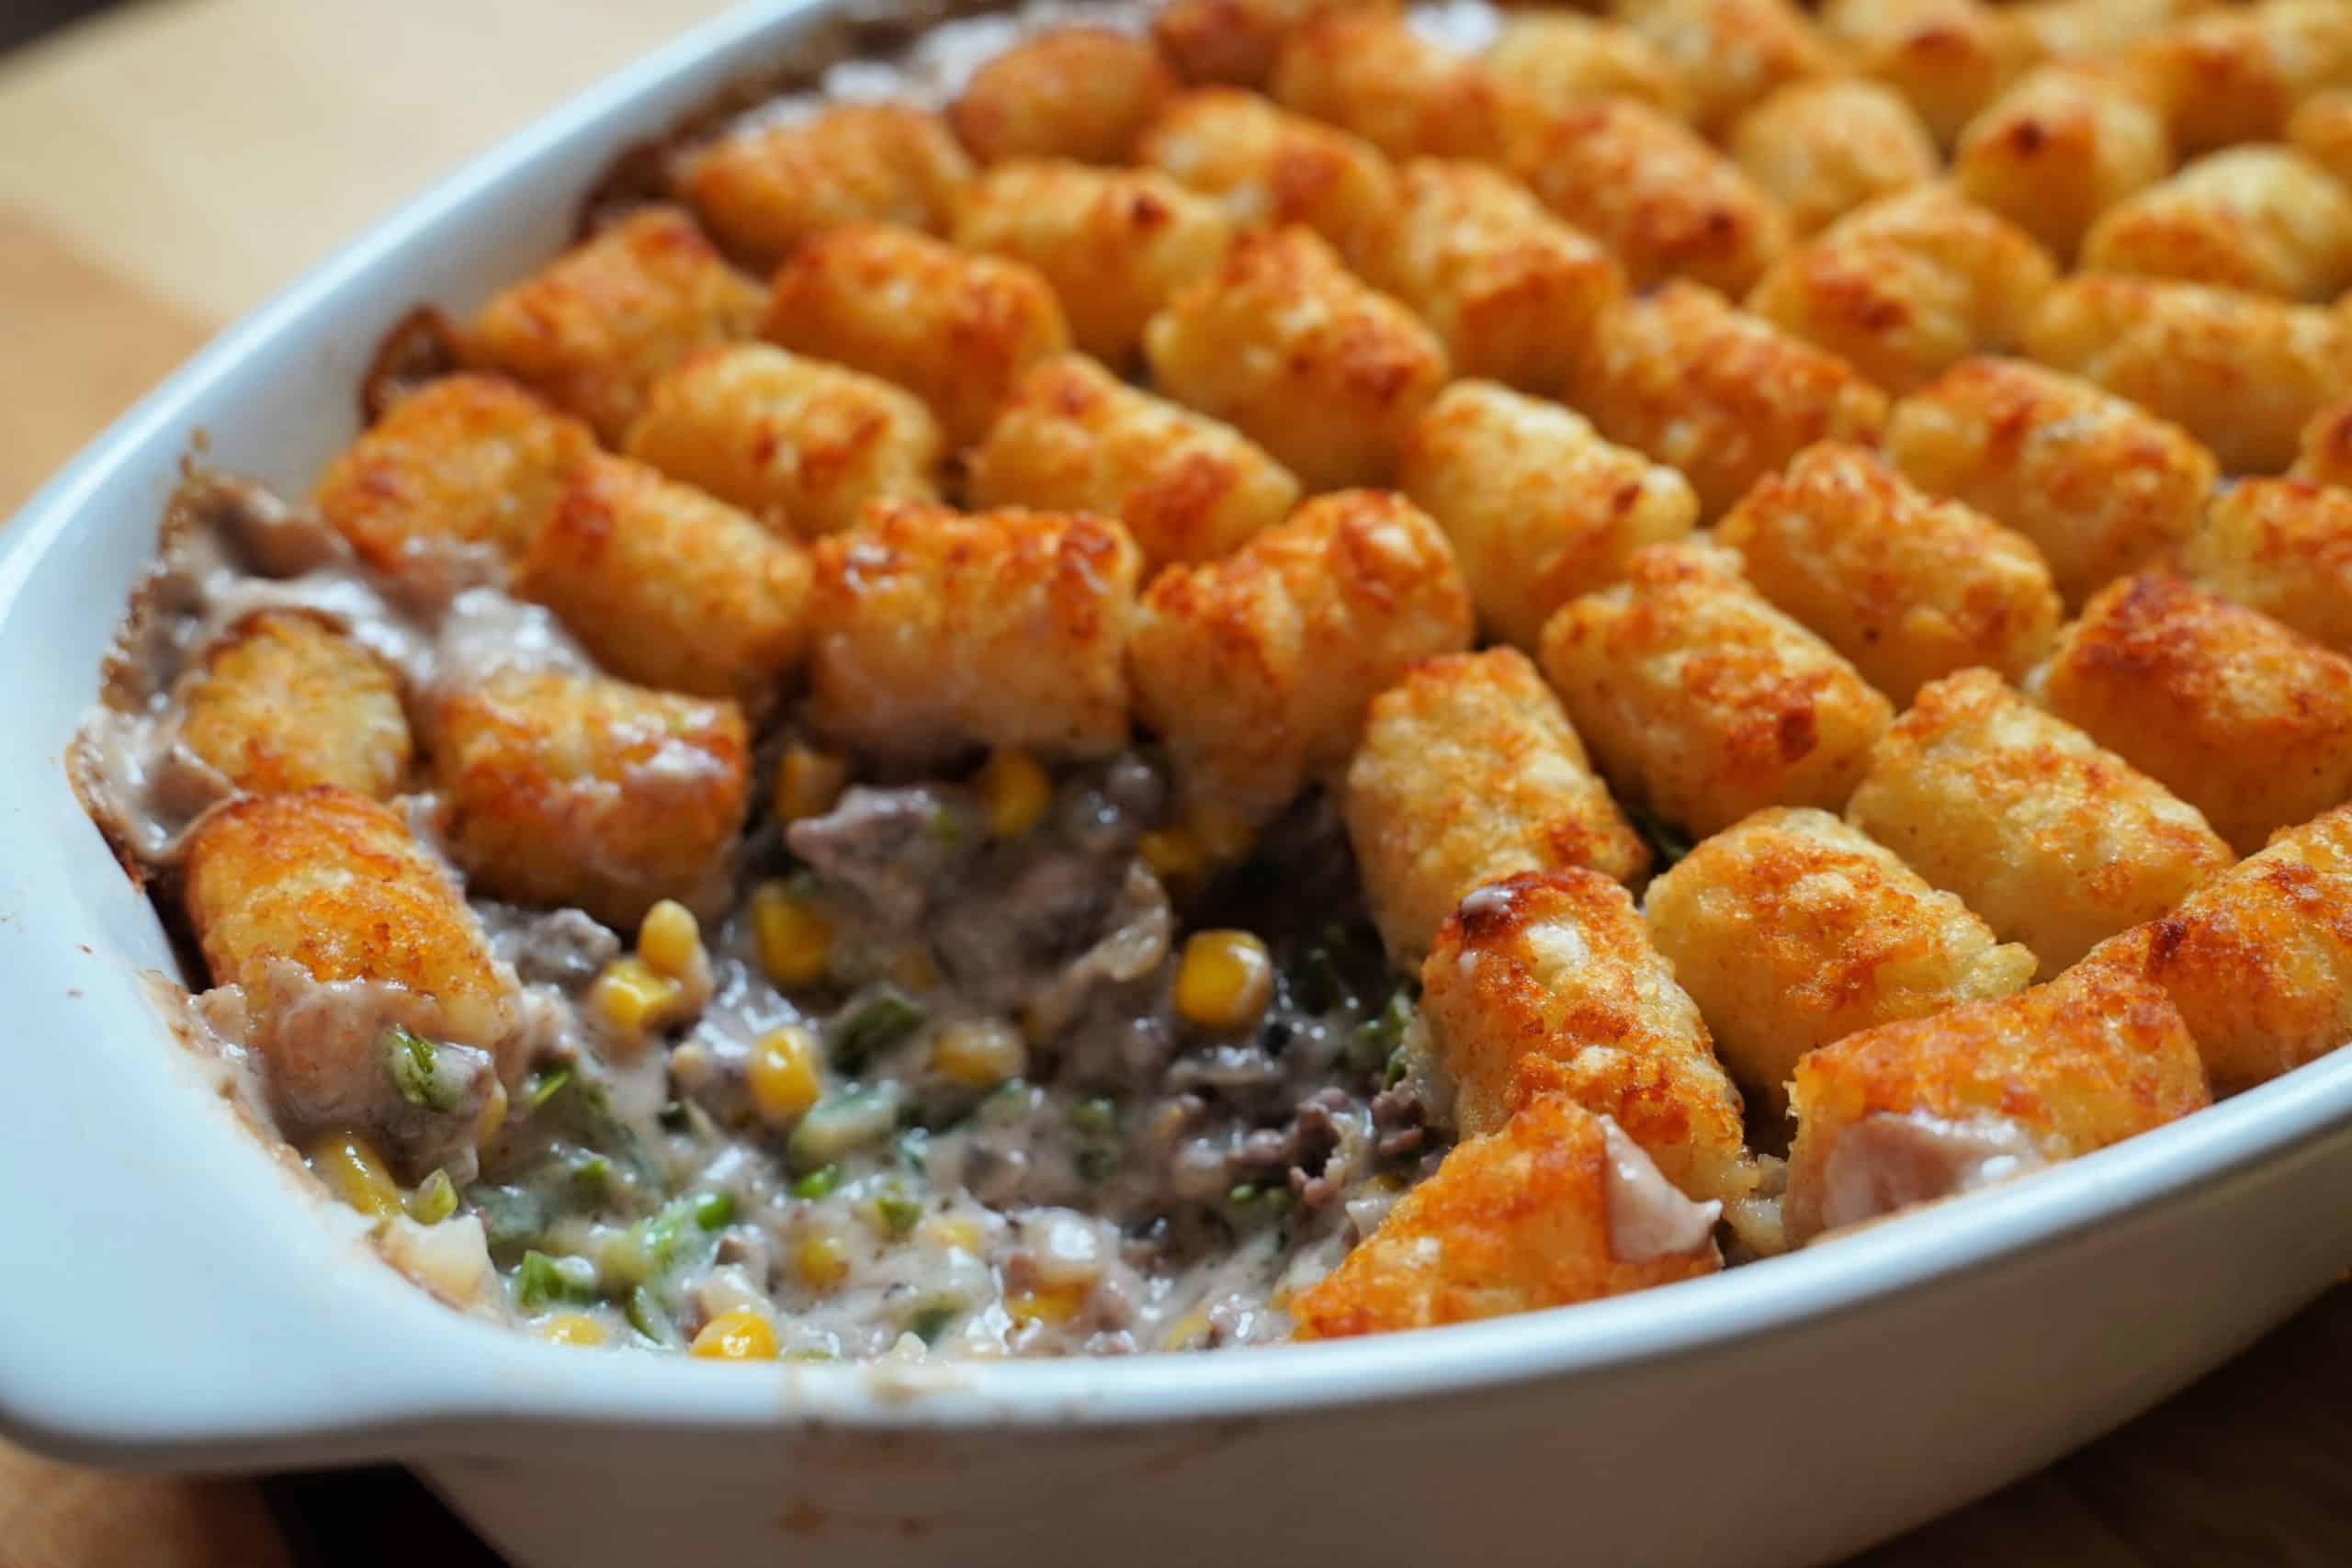 Tater tot casserole hotdish recipe recipes dish minnesota tots potato food easy hot winter cooking cold channel beef soup dakota